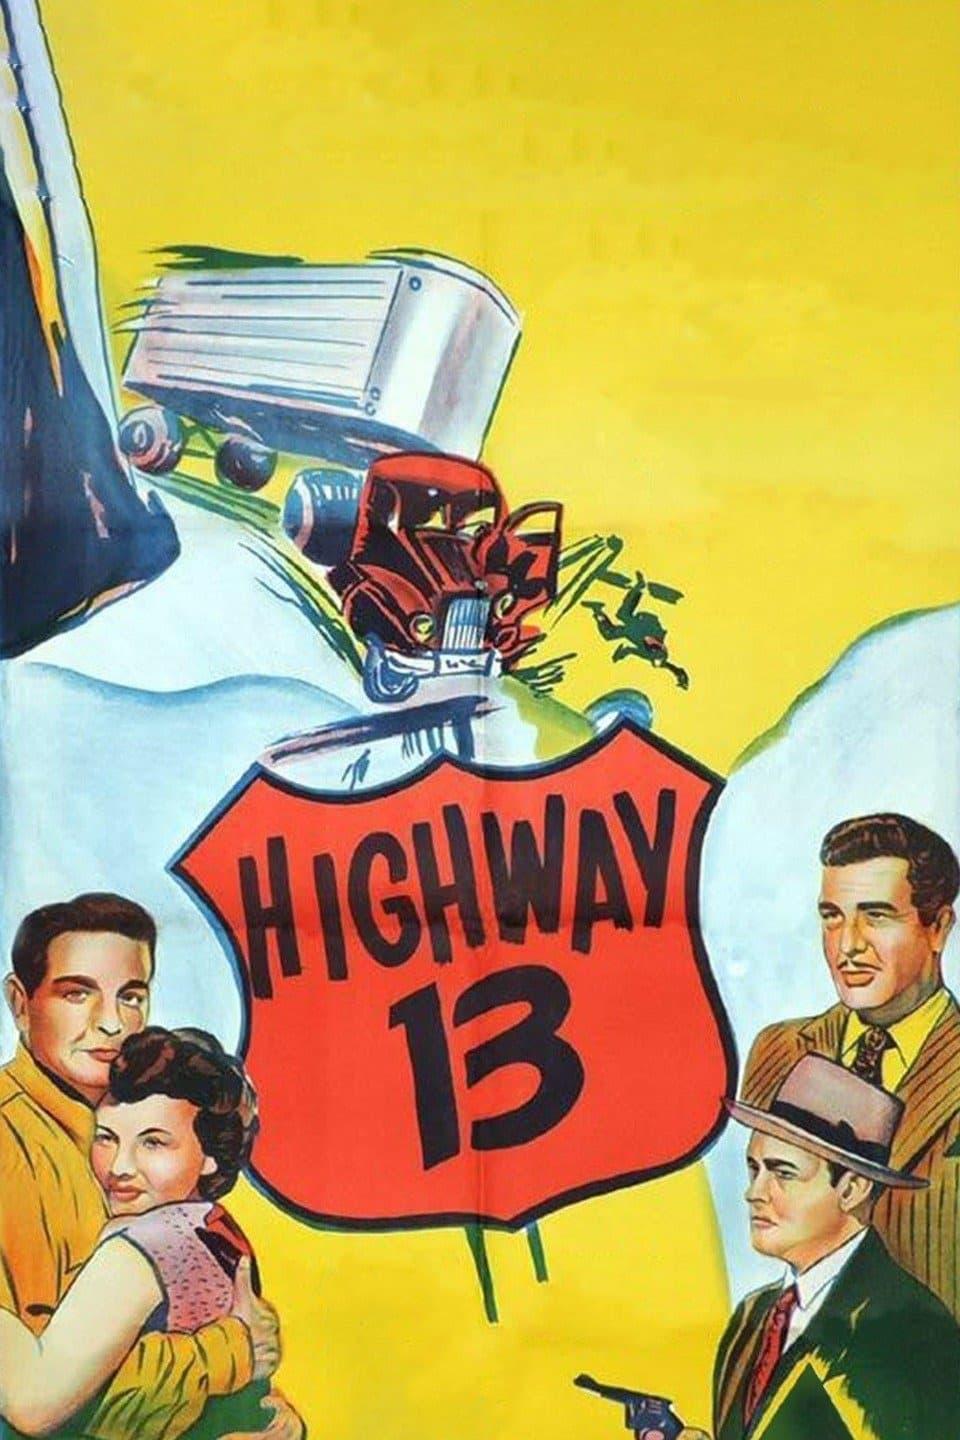 Highway 13 poster